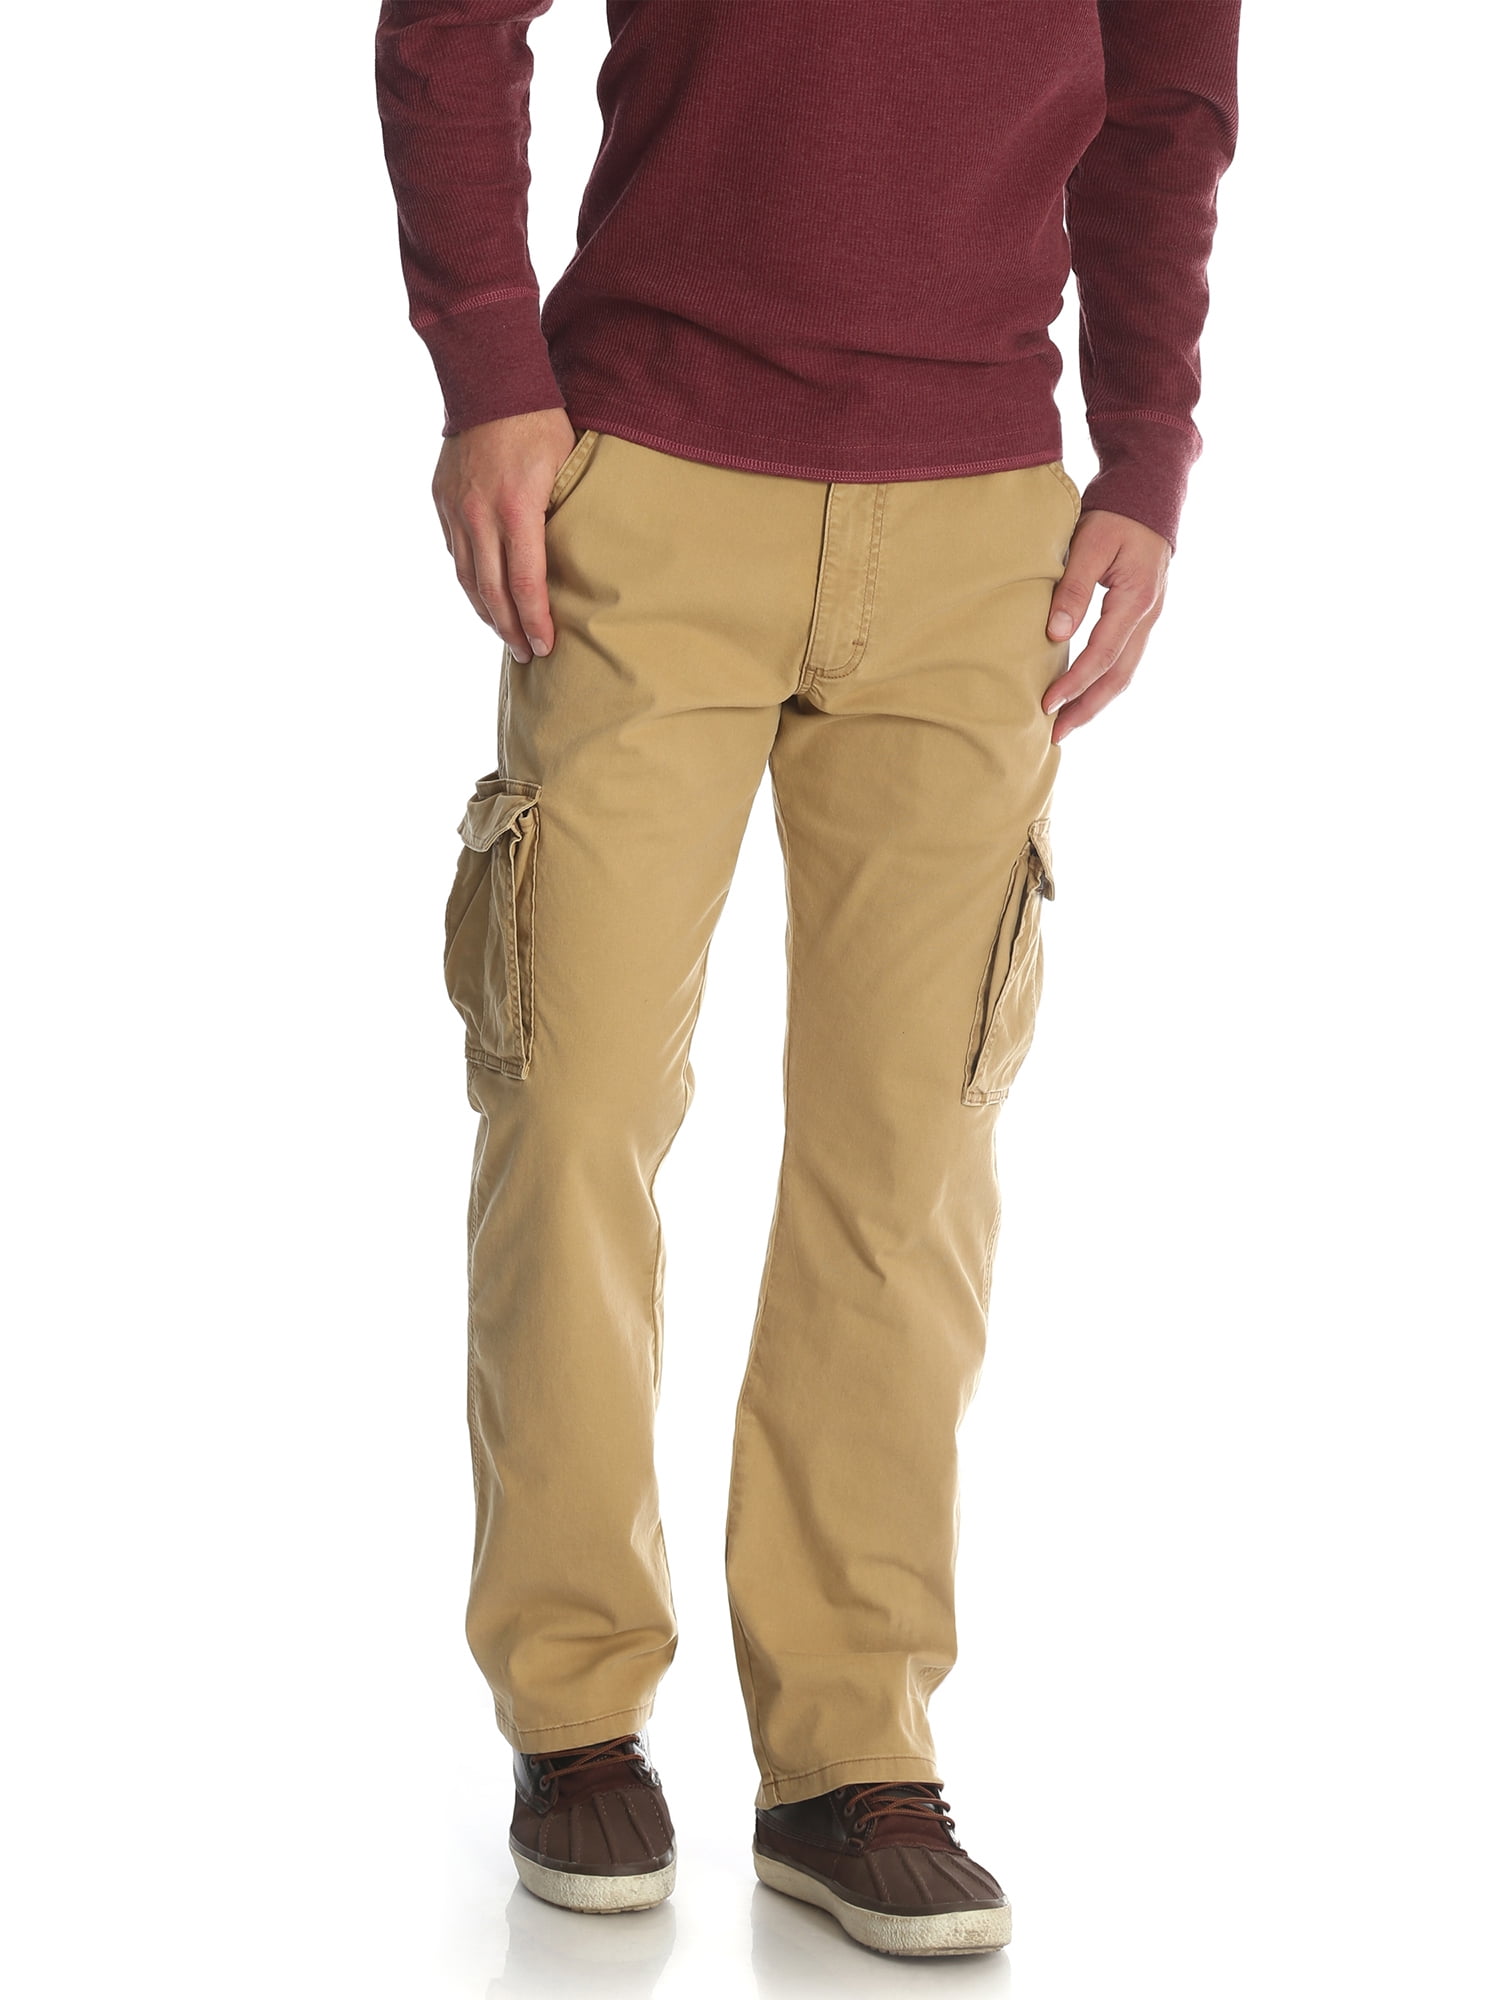 wrangler men's cargo pants with tech pocket